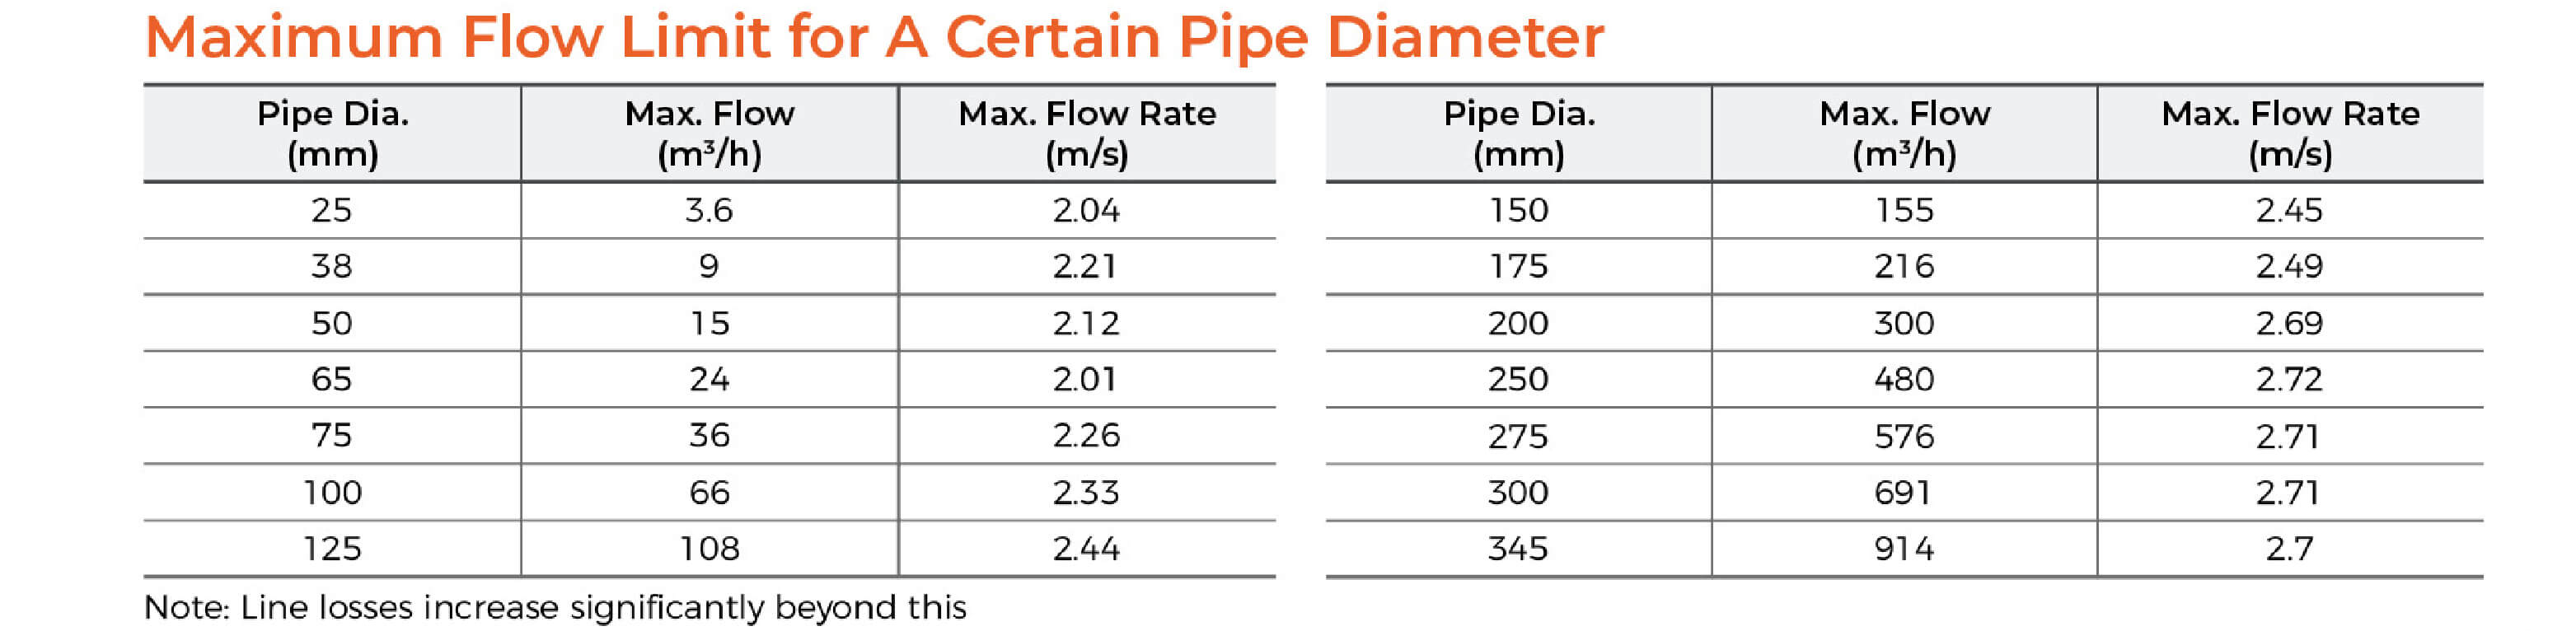 LPP Vertical In-line Pump Max Flow Limit